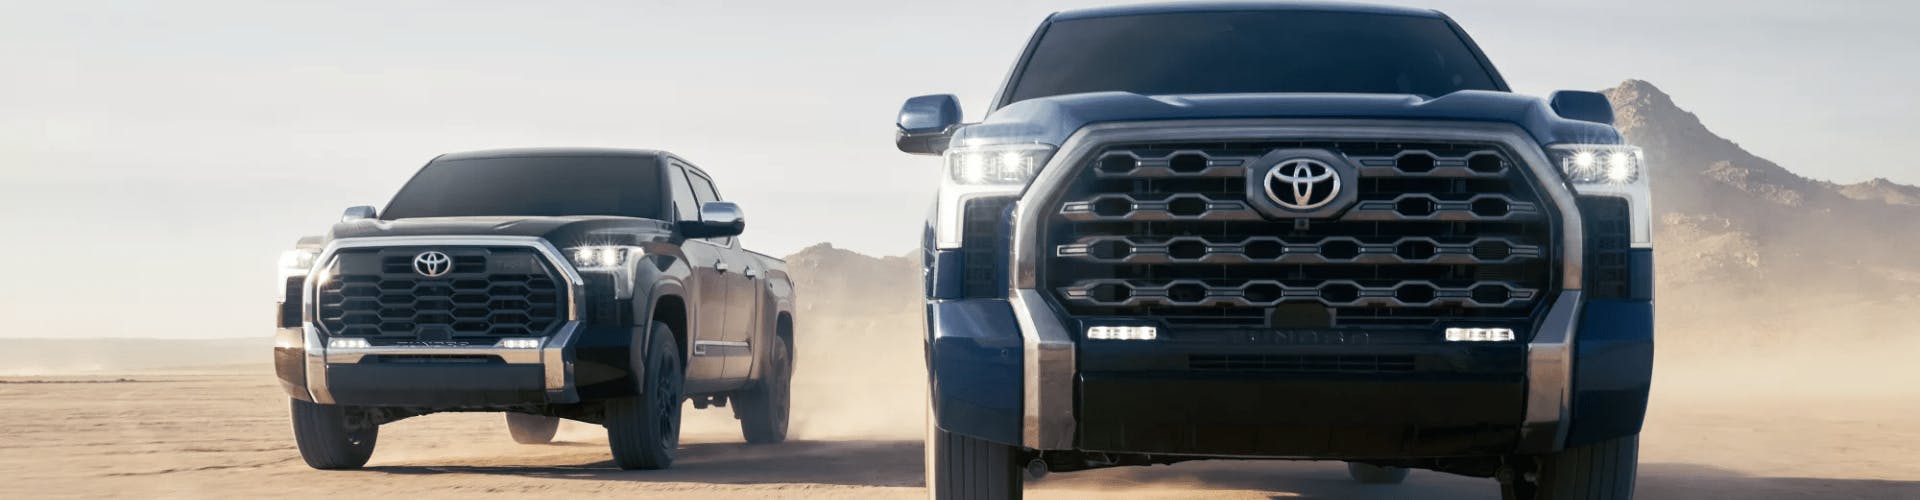 Toyota Tundra driving in desert